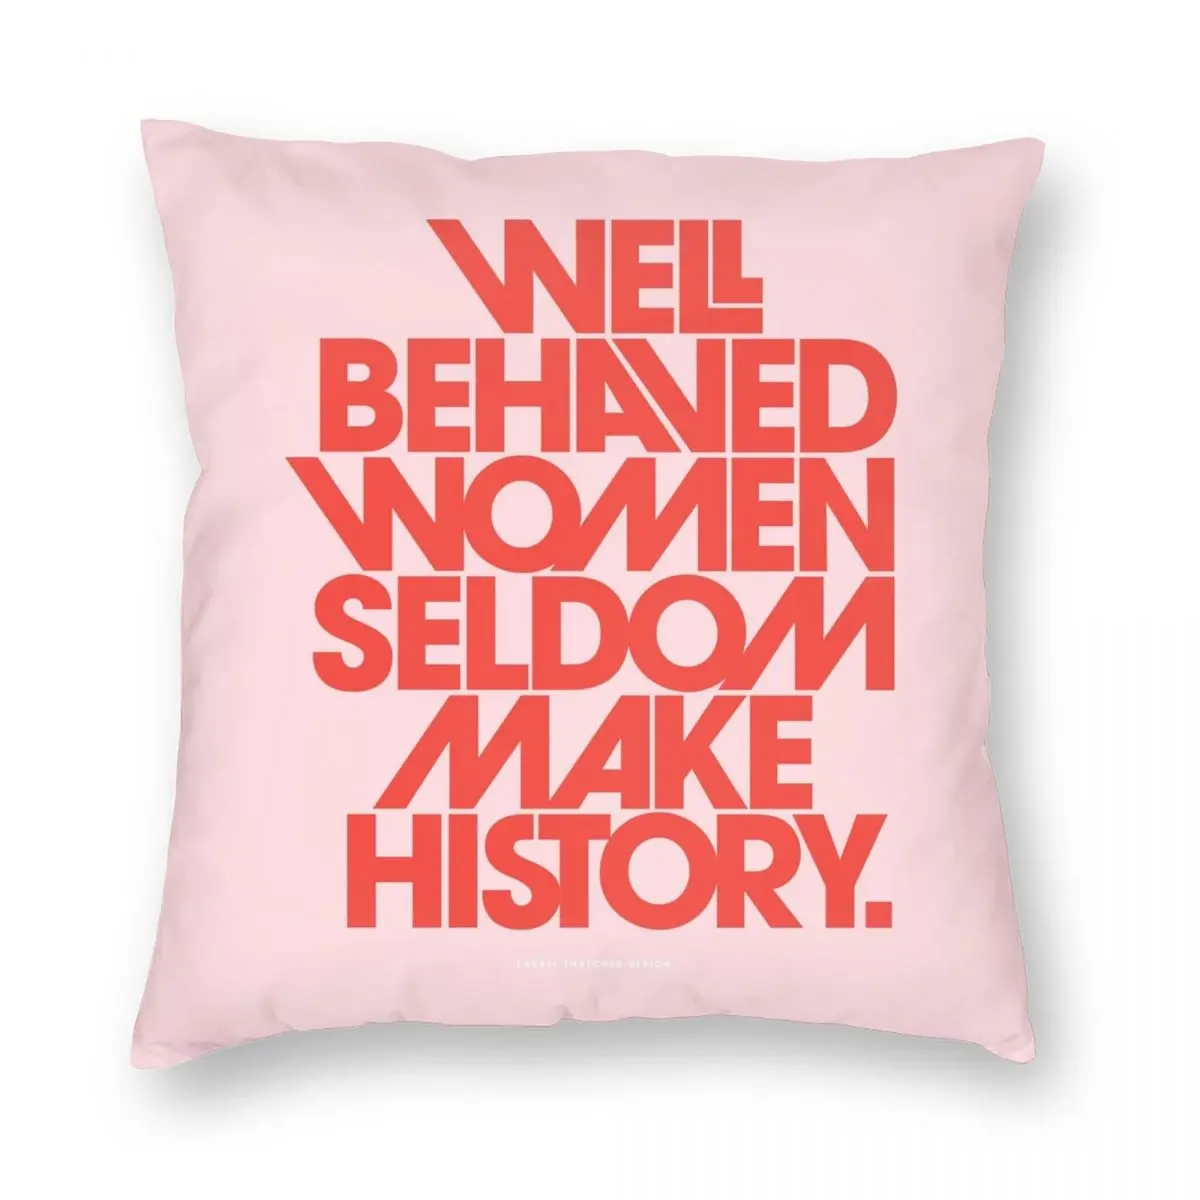 

Well Behaved Women Seldom Make History Pink Square Pillowcase Polyester Linen Velvet Zip Decor Throw Pillow Case Bed Cushion